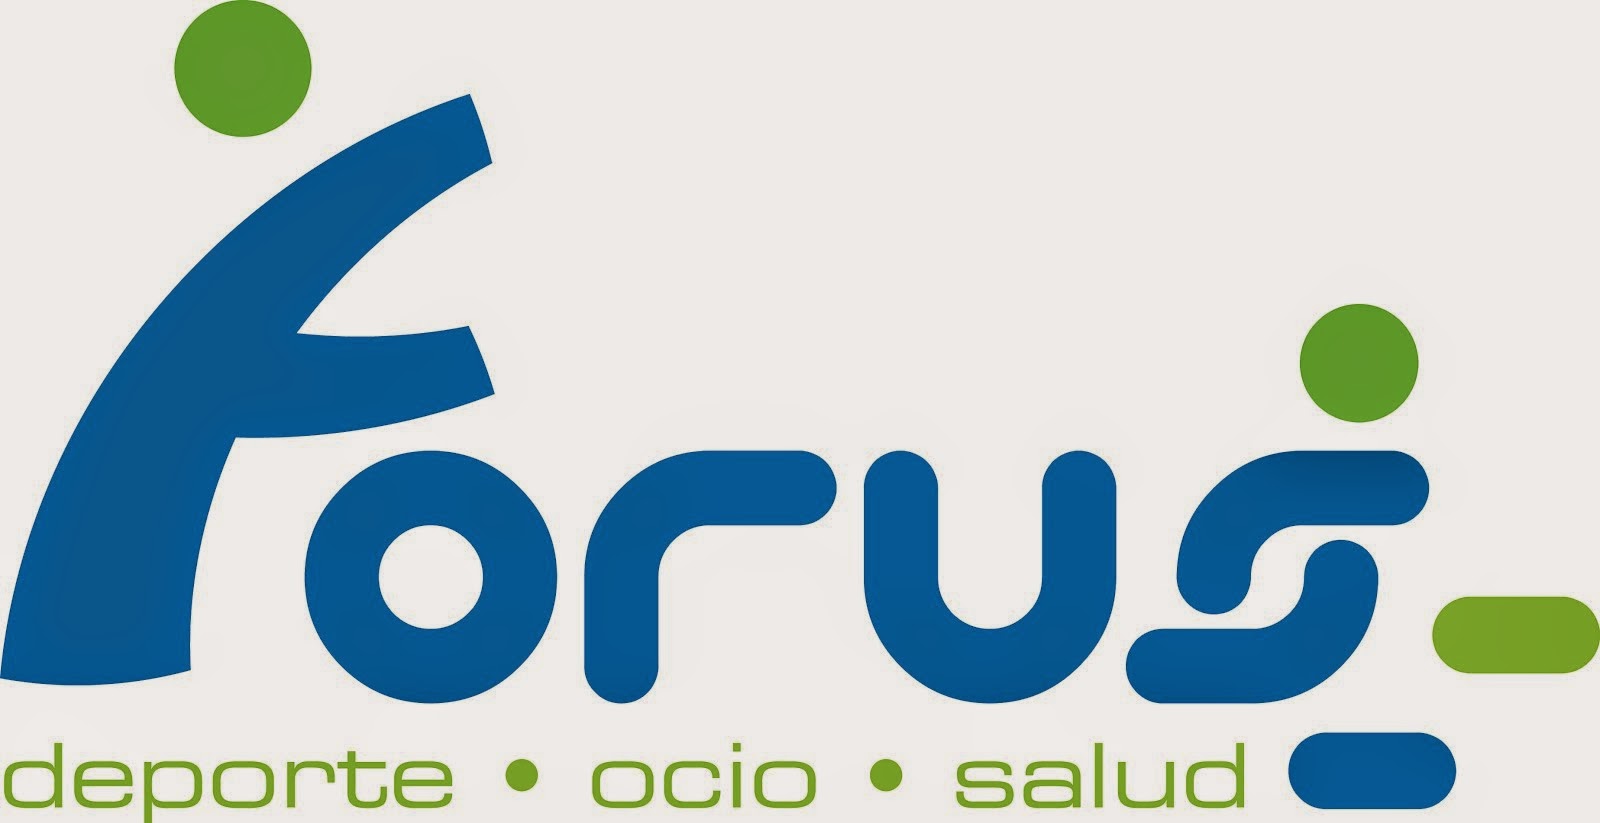 Forus лого. Forus гипсокартон logo. Форус Игркутск логотип. Forus valvab logo. Https pro forus ru